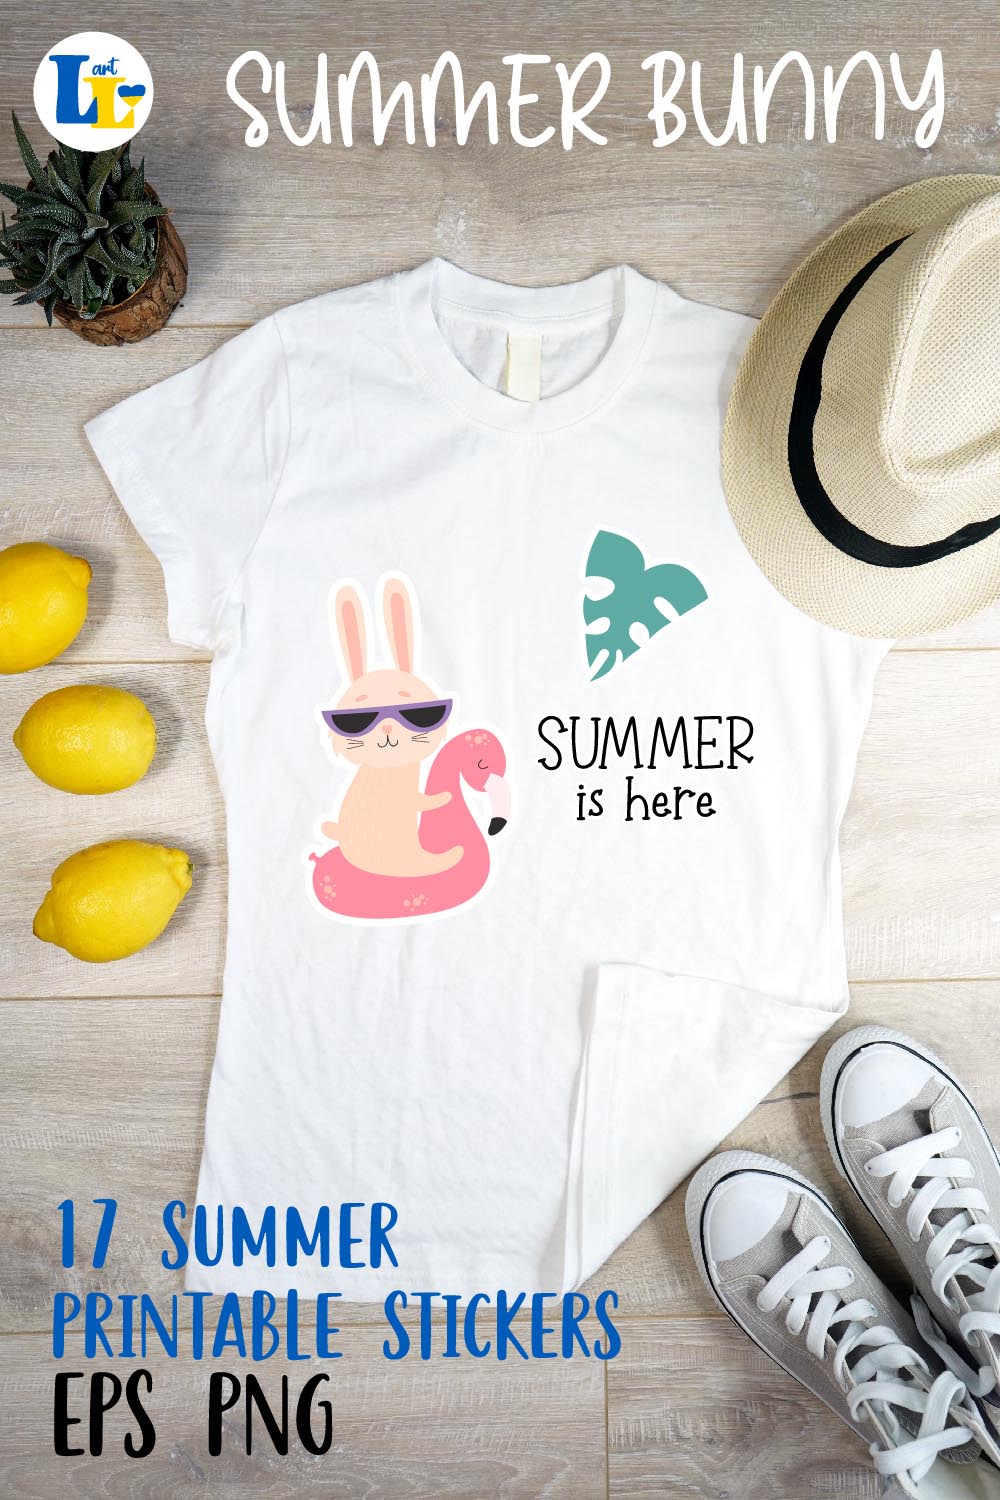 Beach Bunny And Summer Slogan Digital Summer Stickers Pinterest Image.